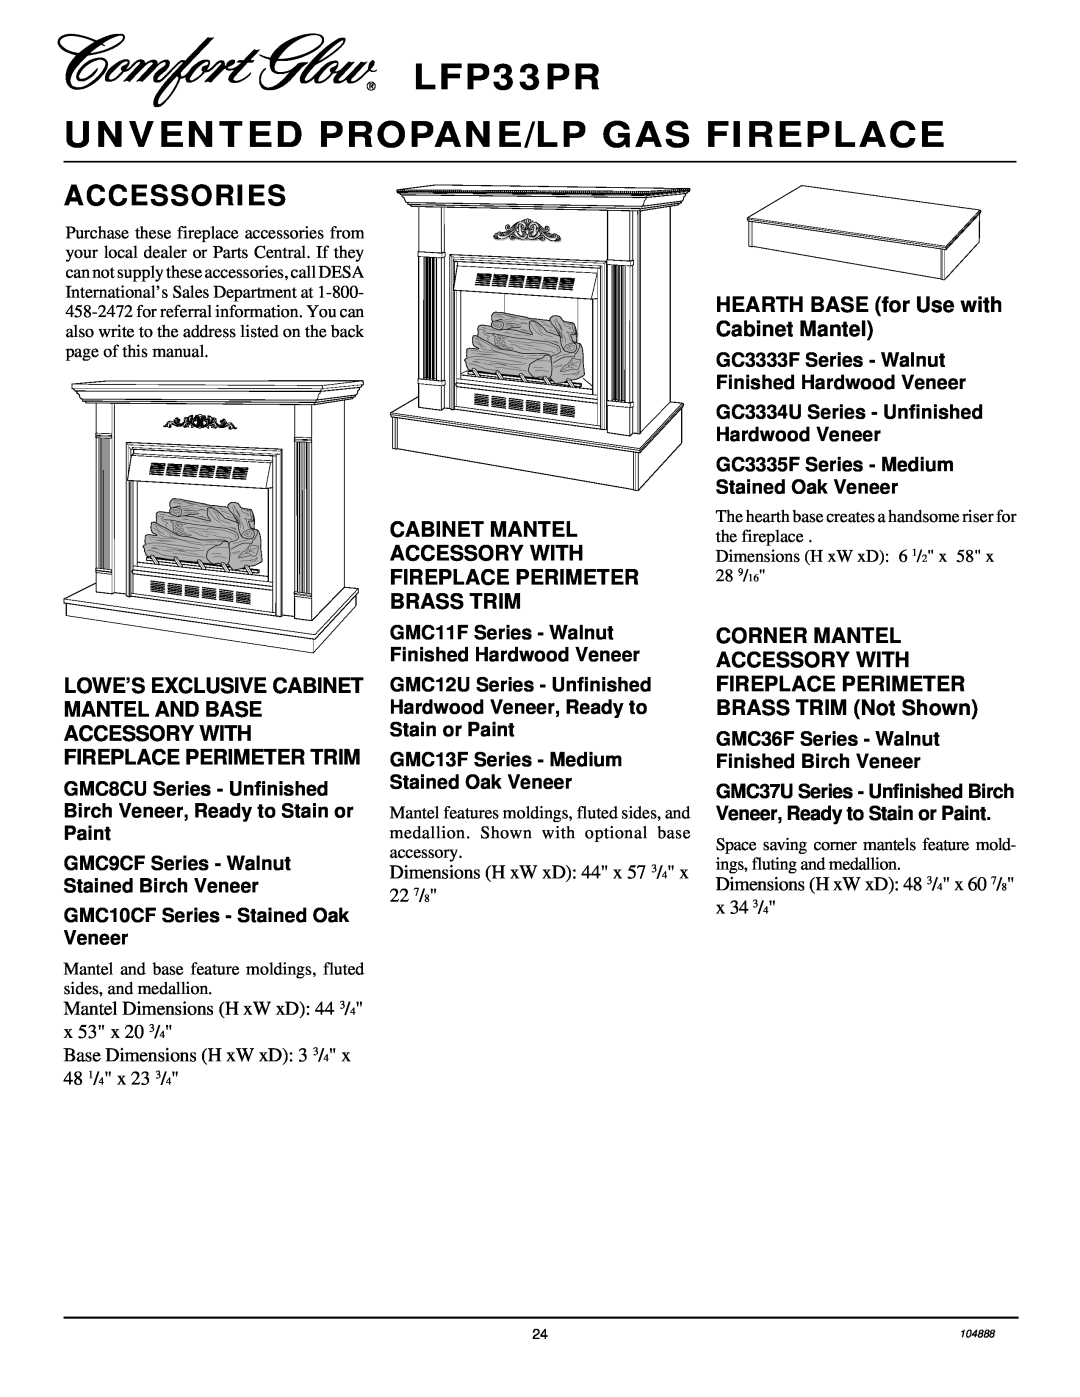 Desa LFP33PR Accessories, HEARTH BASE for Use with Cabinet Mantel, Corner Mantel, Dimensions H xW xD 44 x 57 3/4 x 22 7/8 